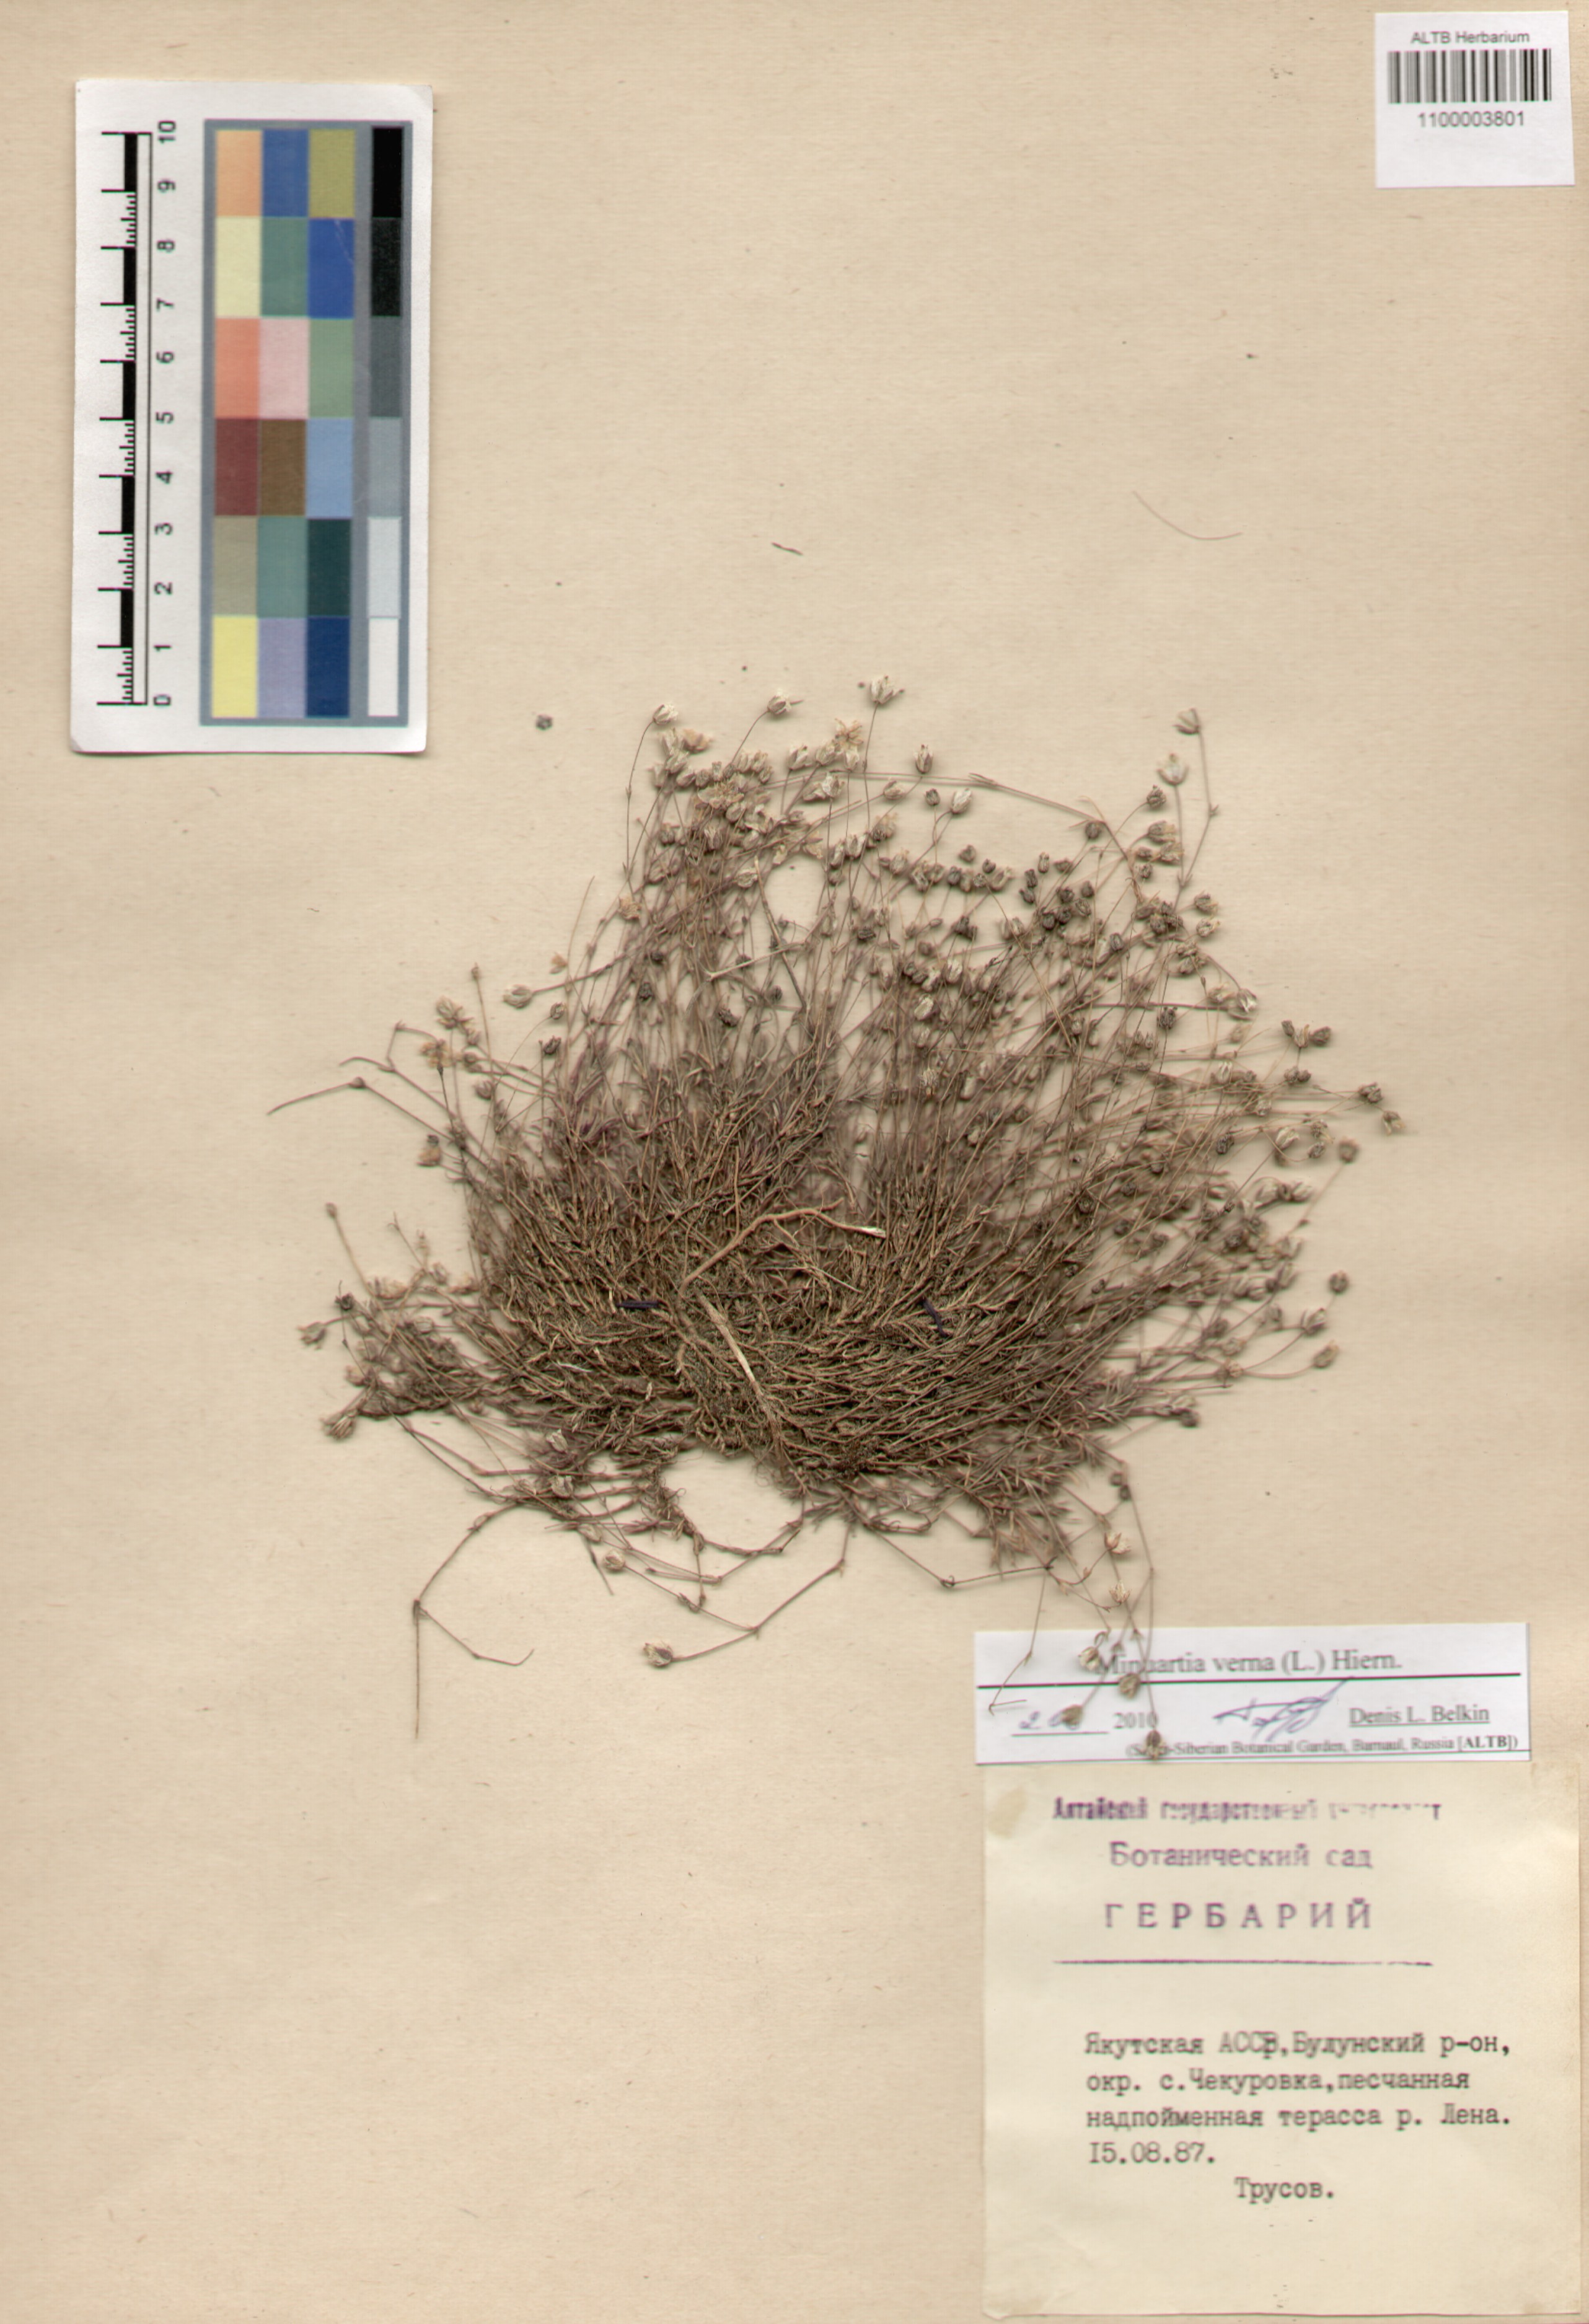 Caryophyllaceae,Minuartia verna (L.) Hiern.